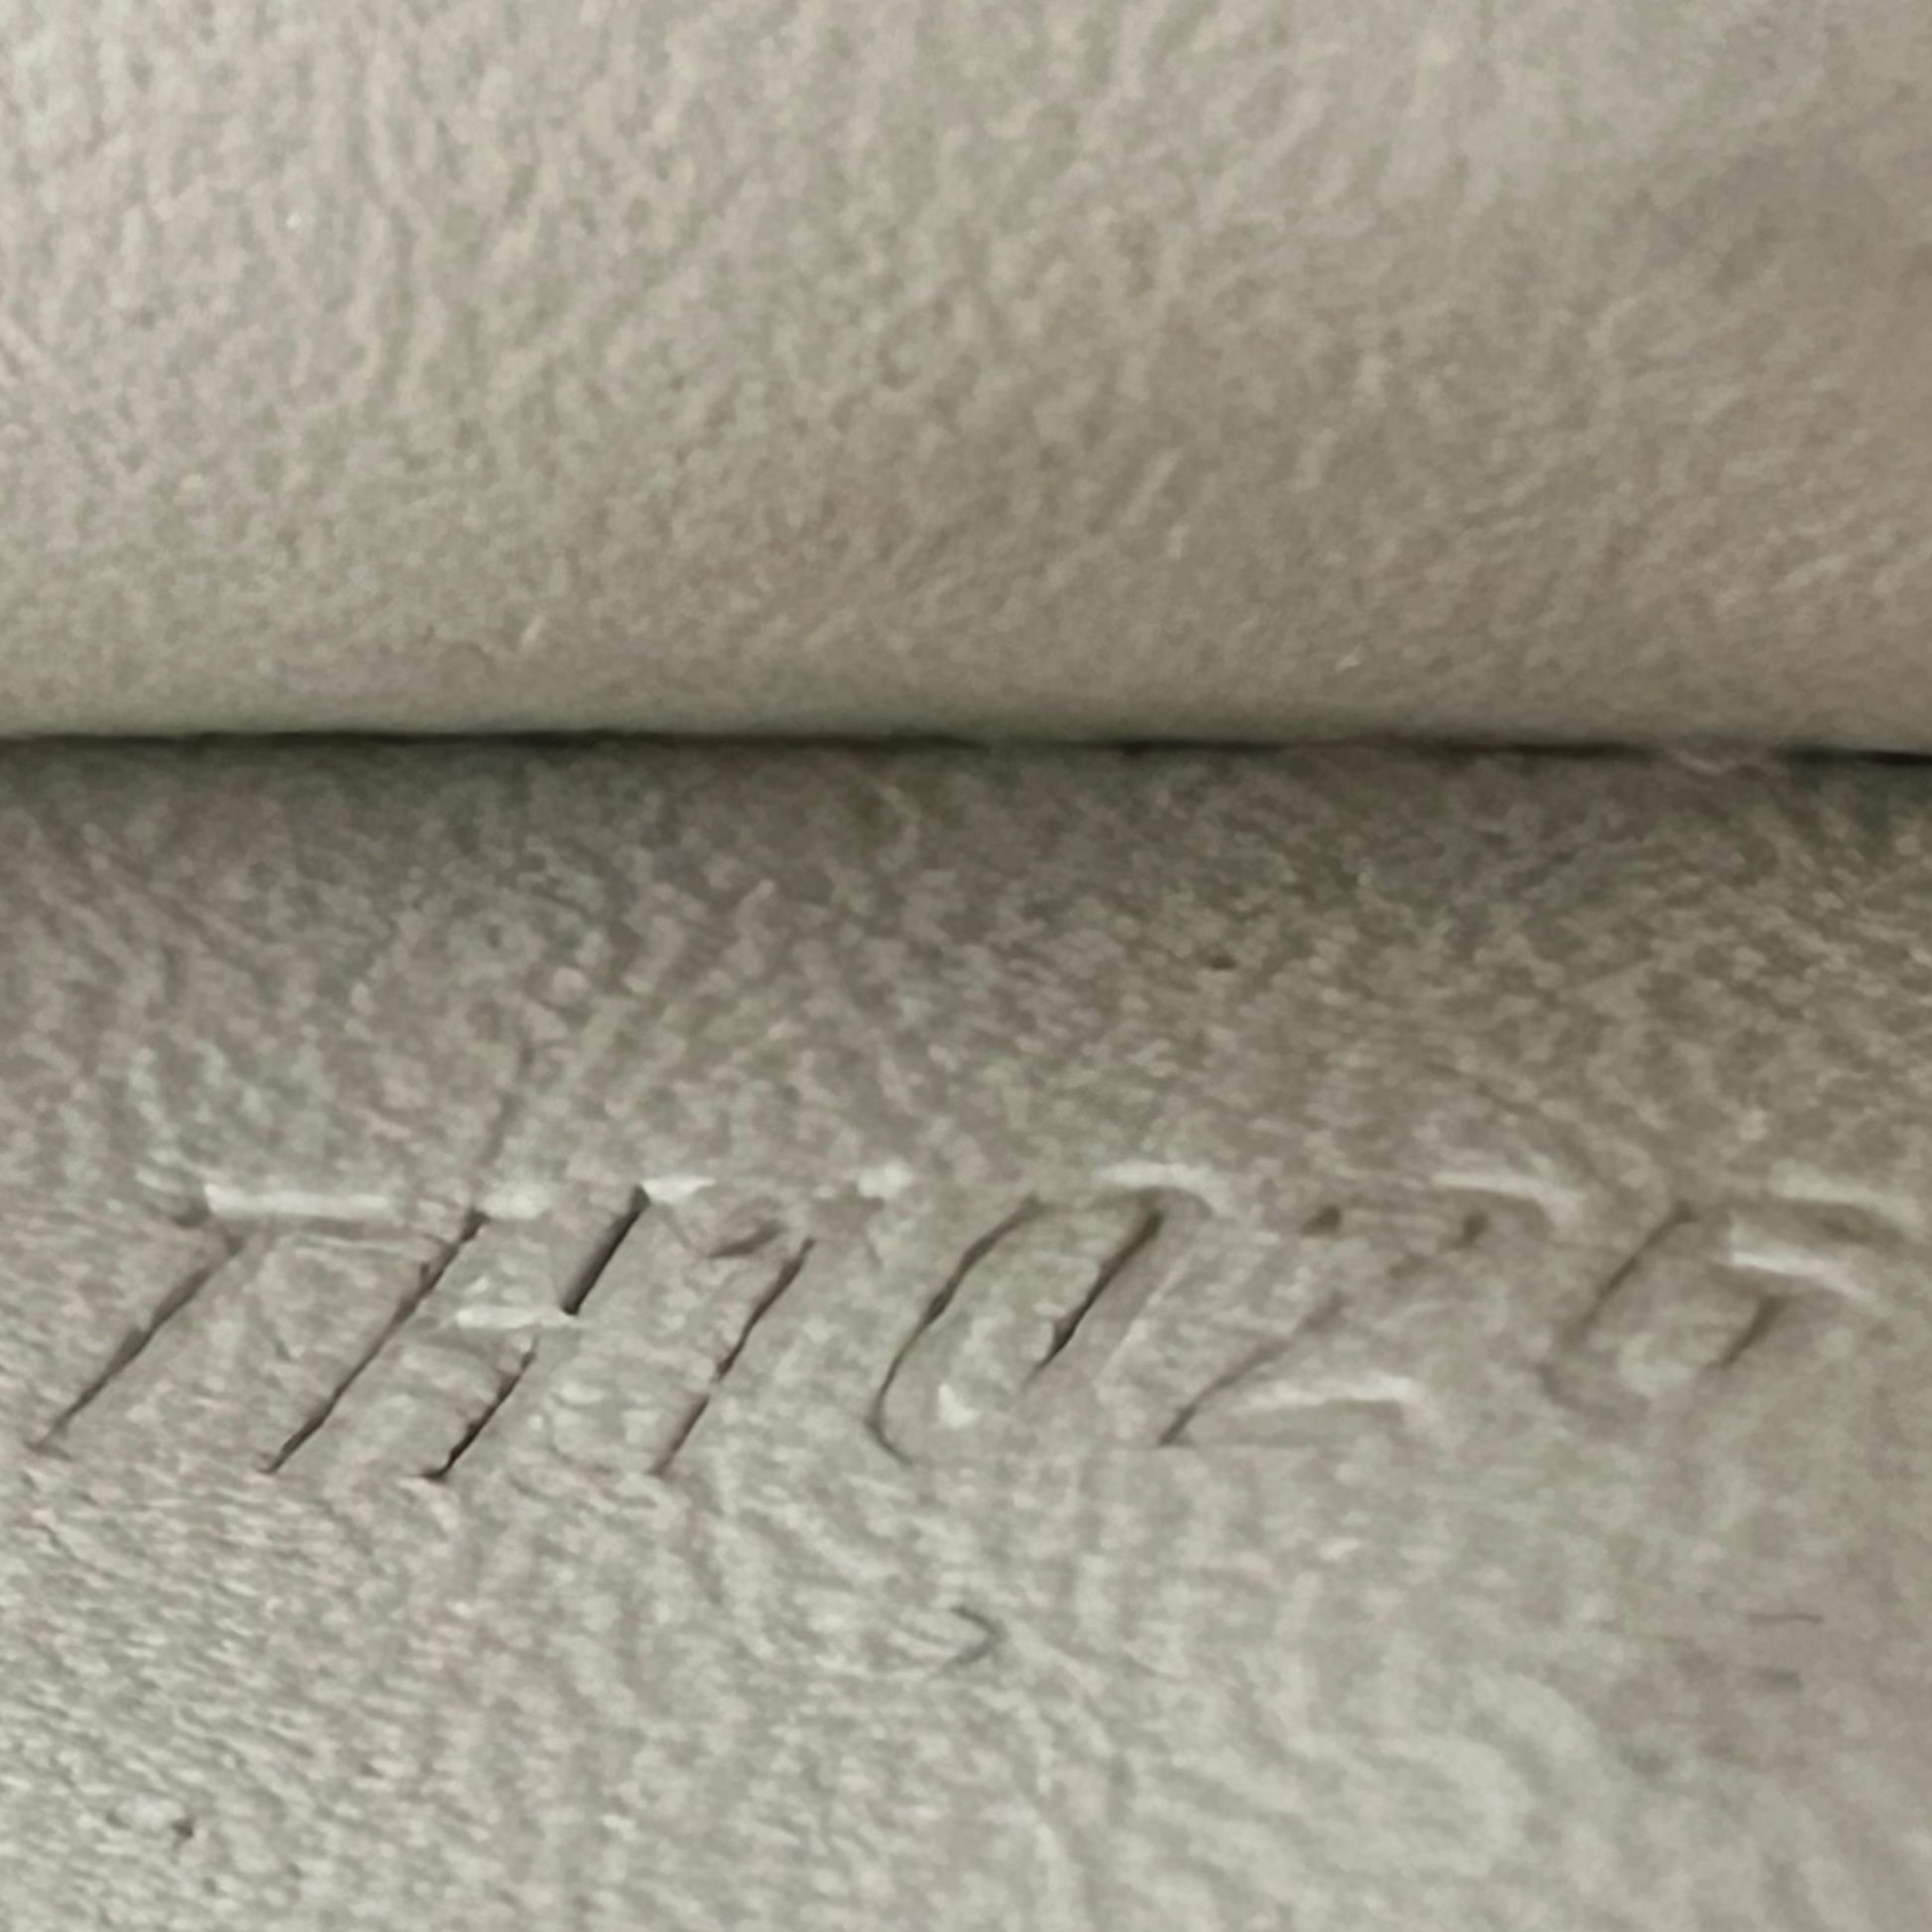 Louis Vuitton Grey Monogram Vernis Leather Sarah Wallet